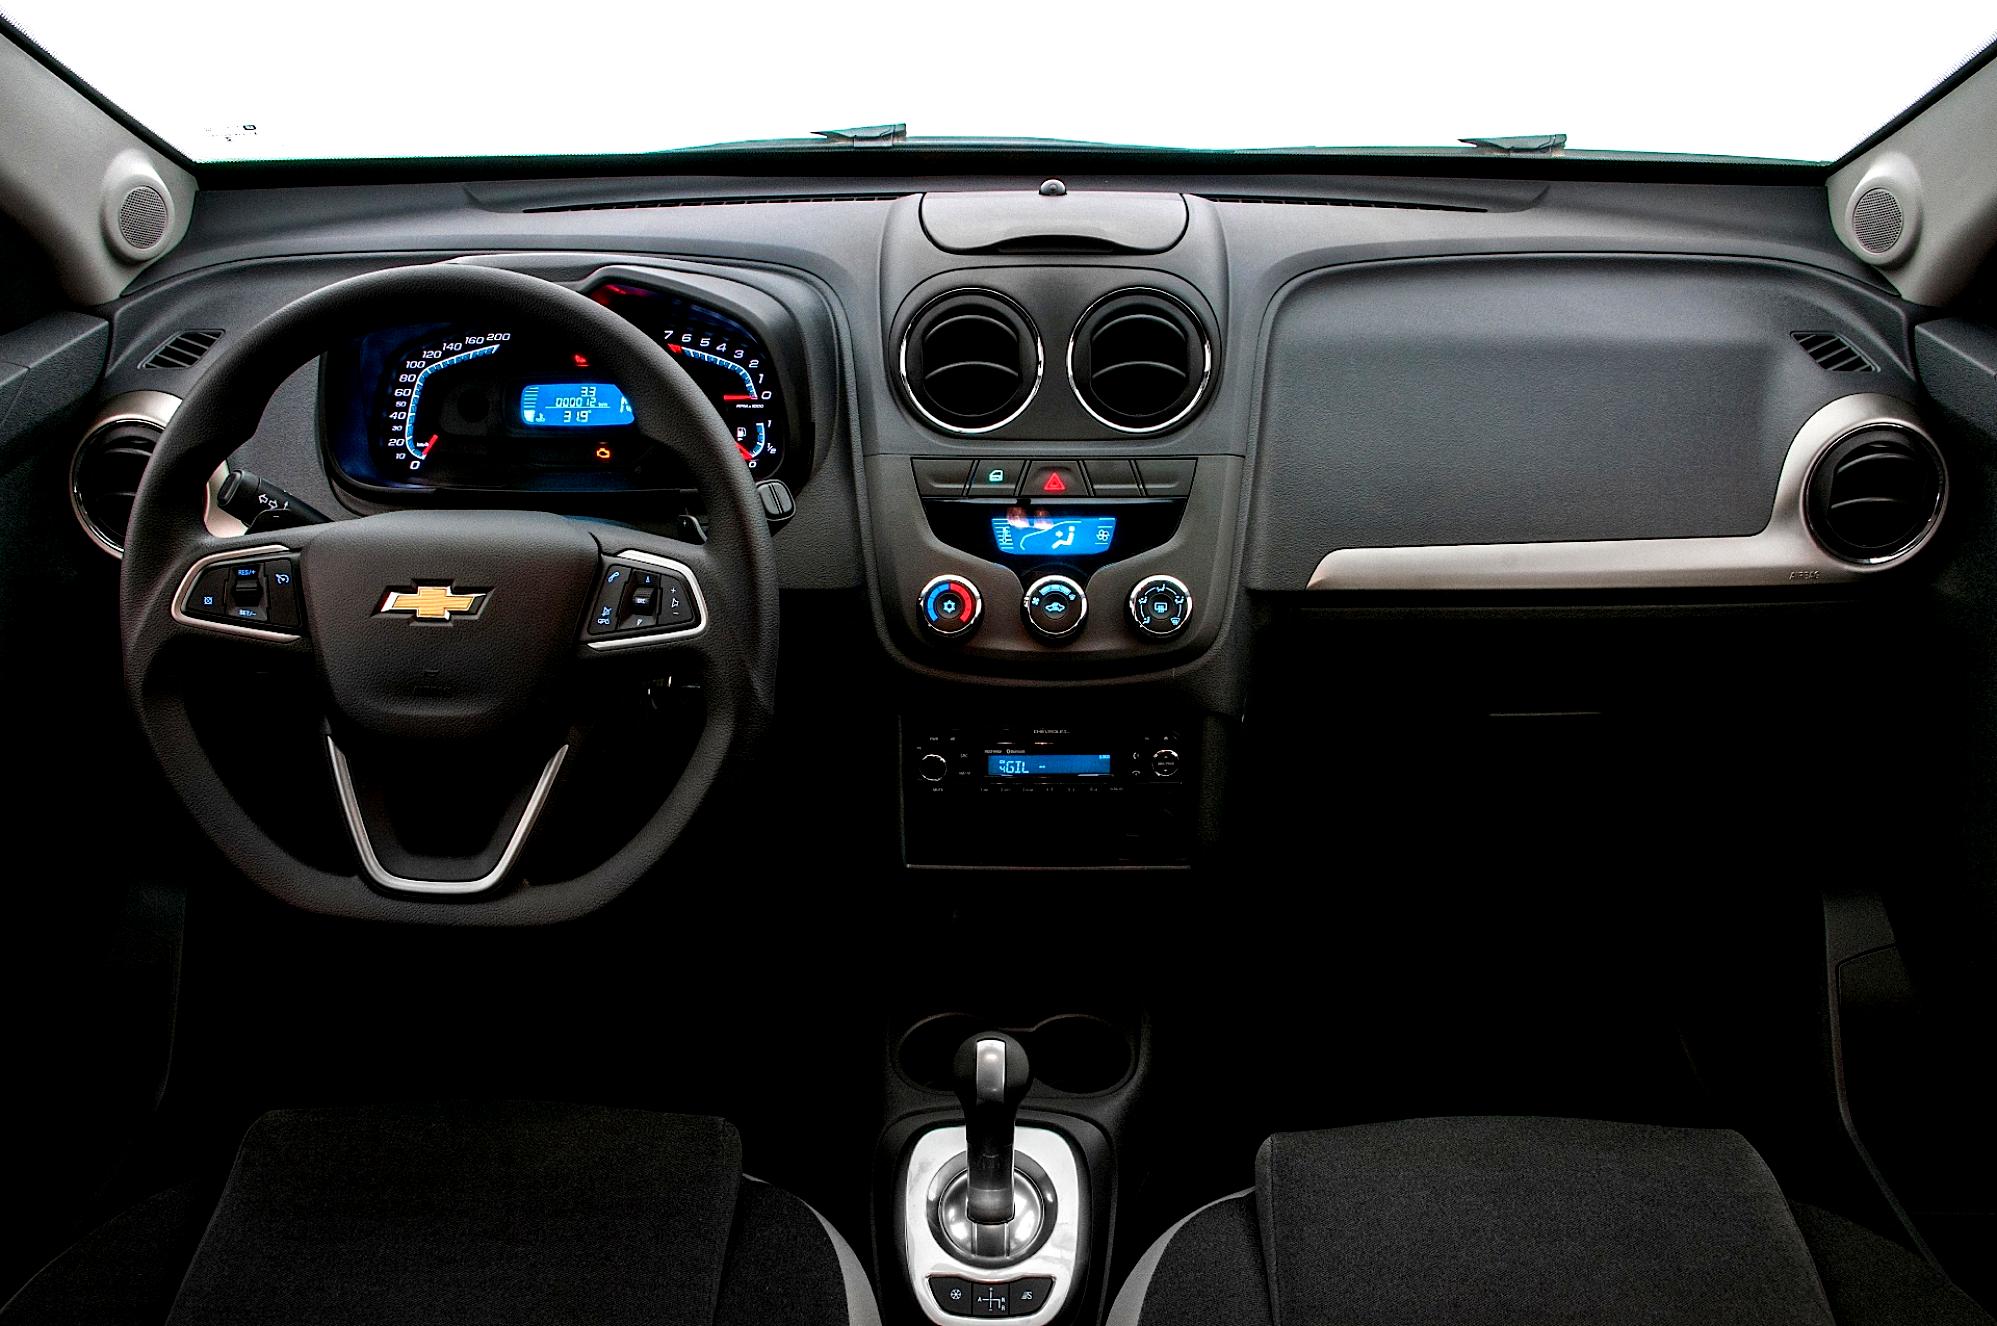 Chevrolet Agile 2013 #131